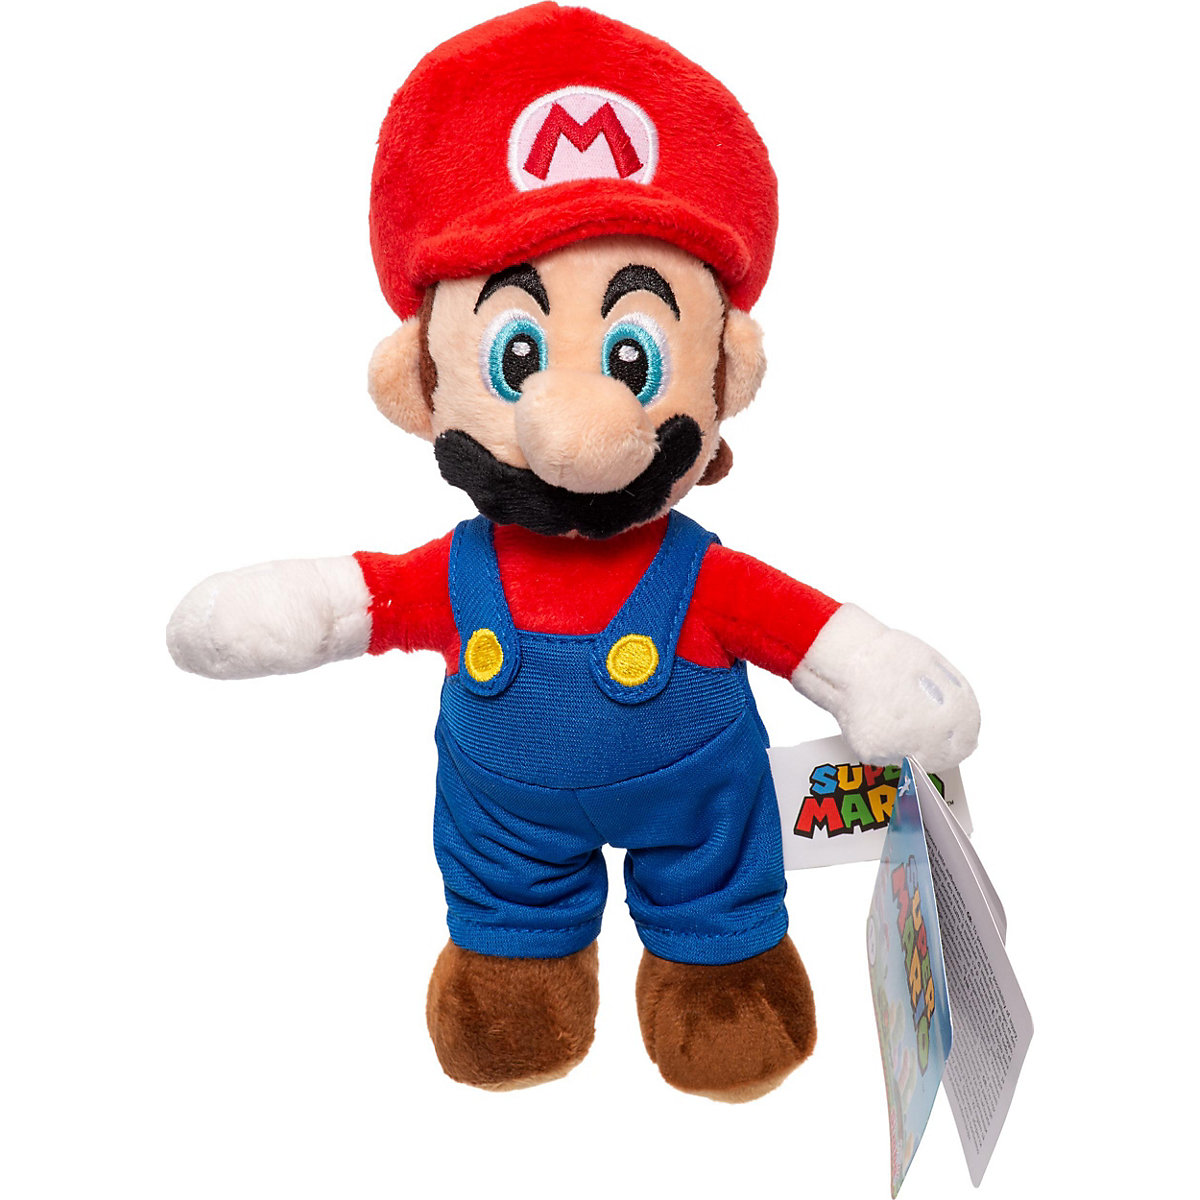 Super Mario #2 20cm Plüsch